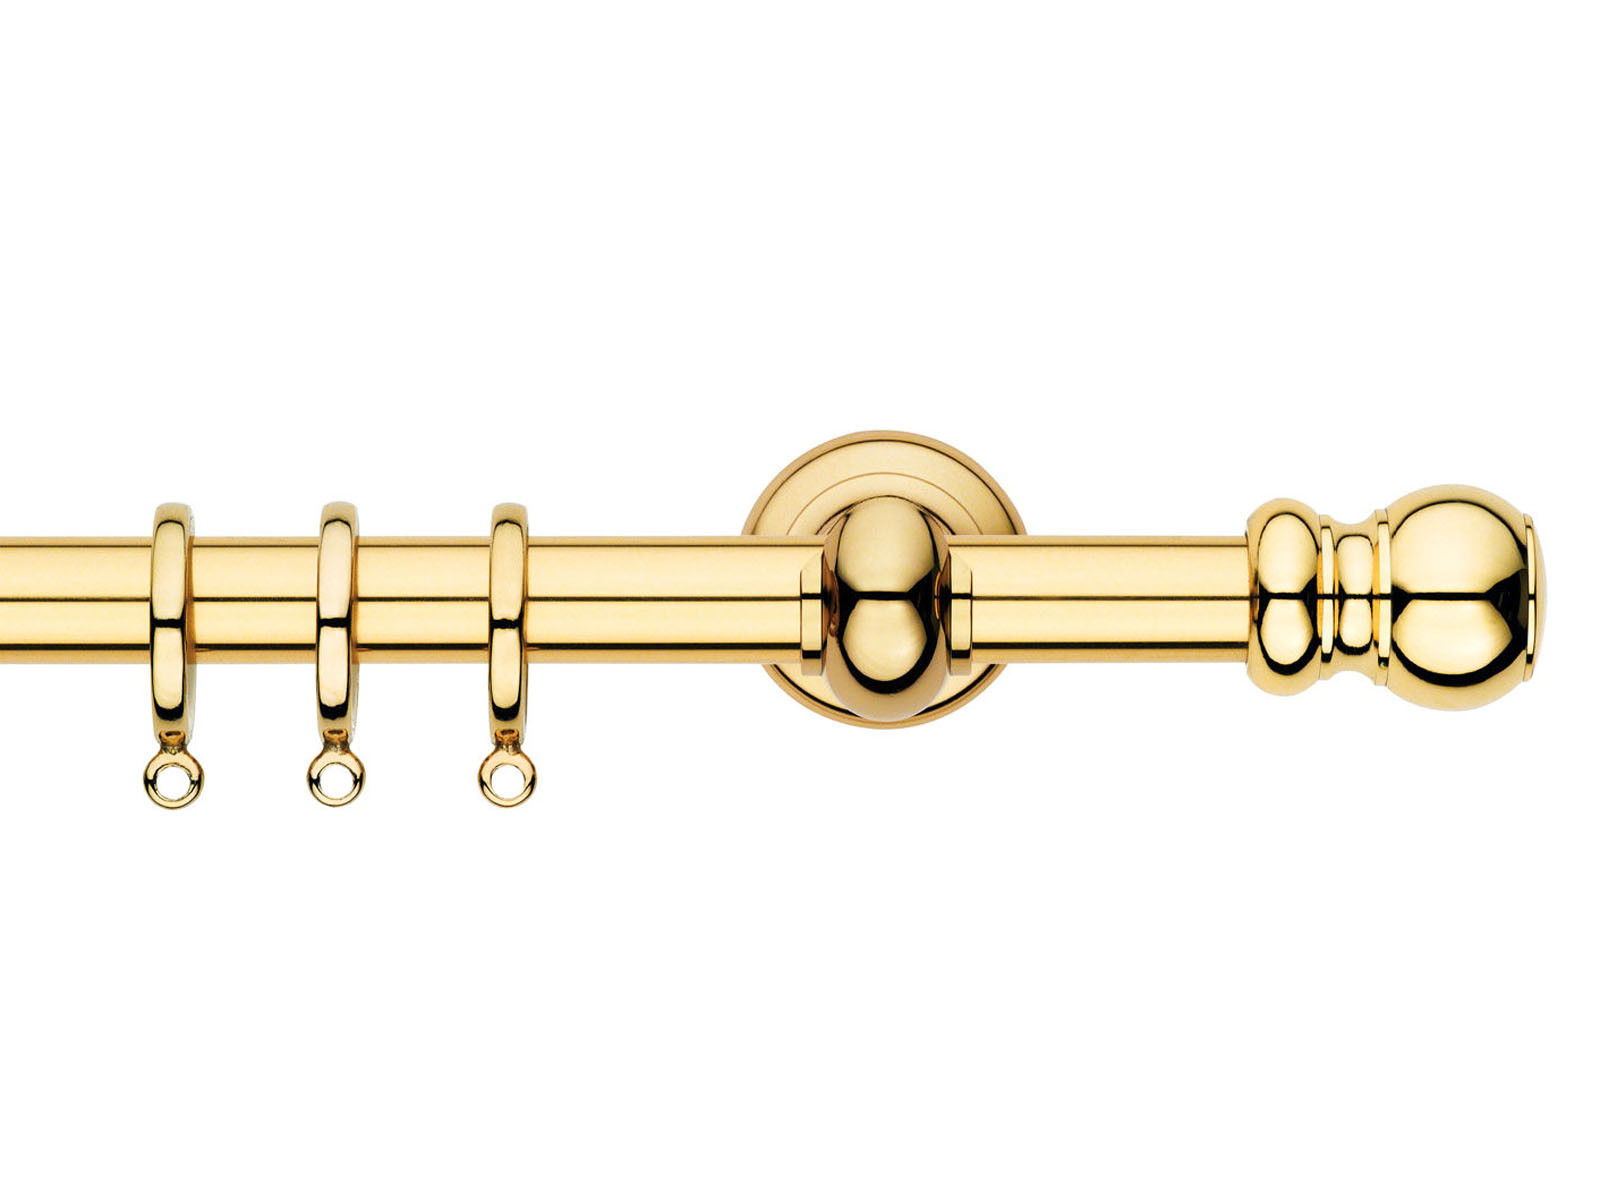 Karnisz Scaglioni Brass Teti Brass Polished 20/340